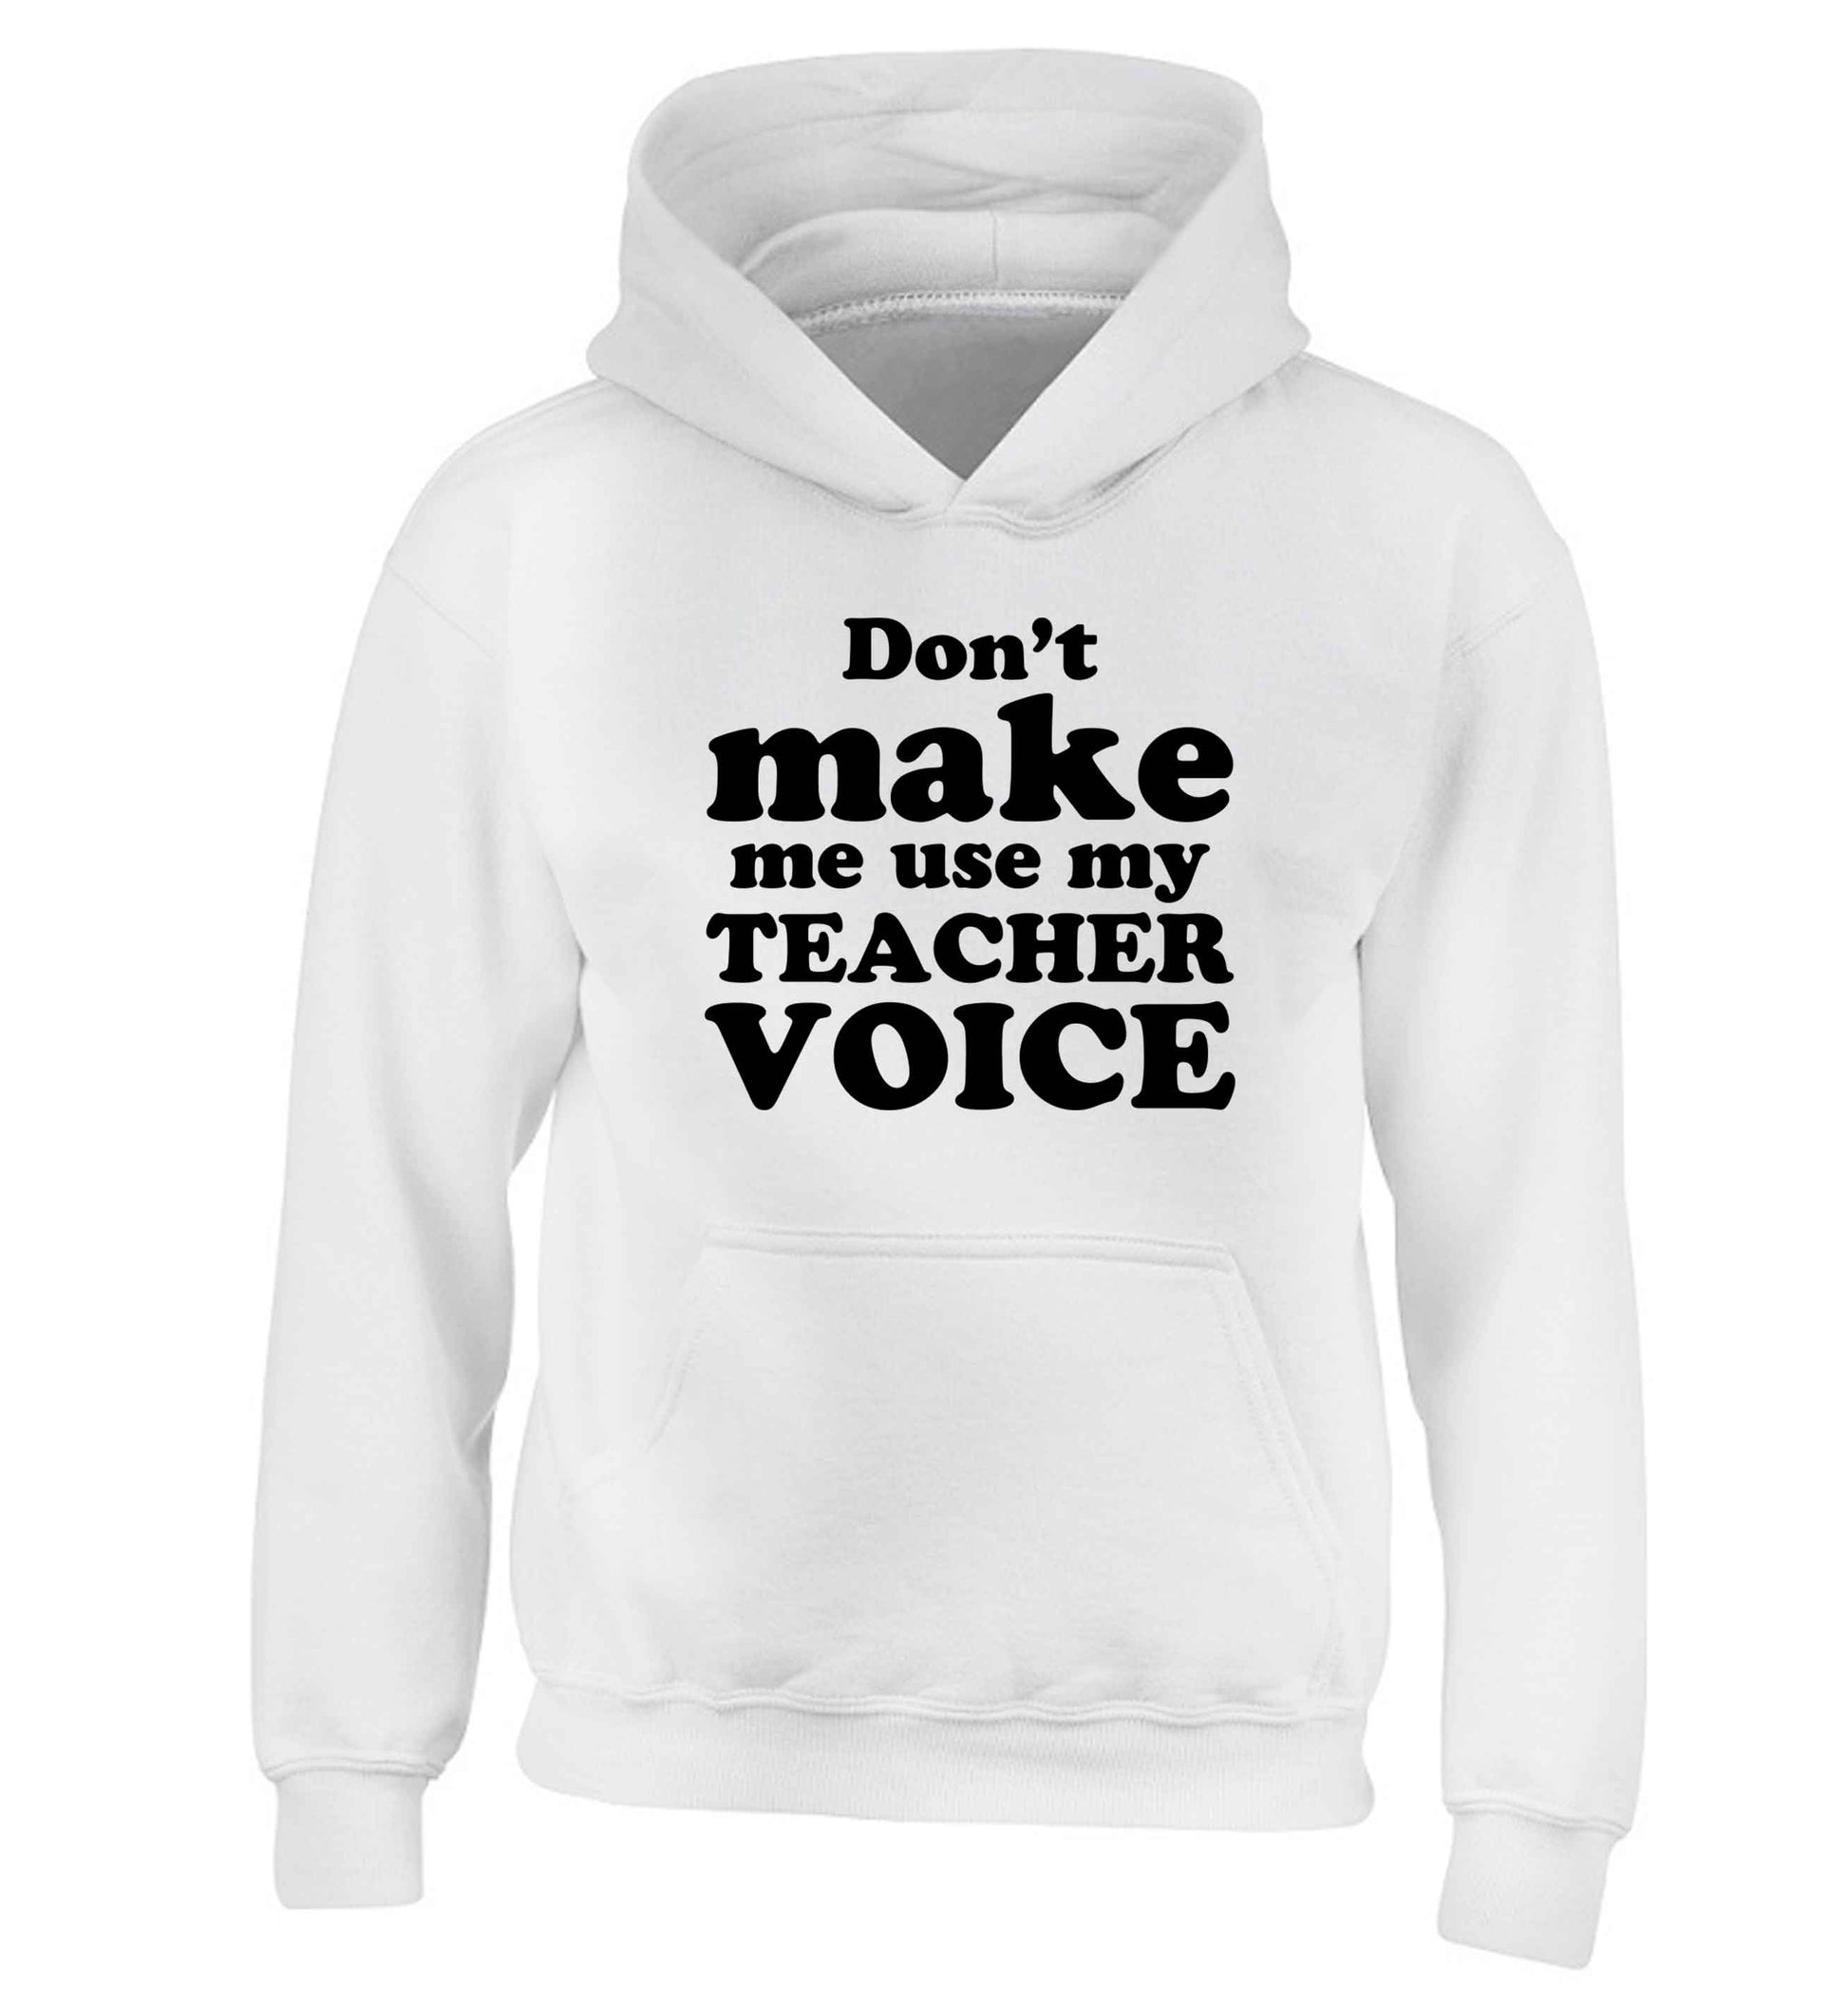 Don't make me use my teacher voice children's white hoodie 12-13 Years